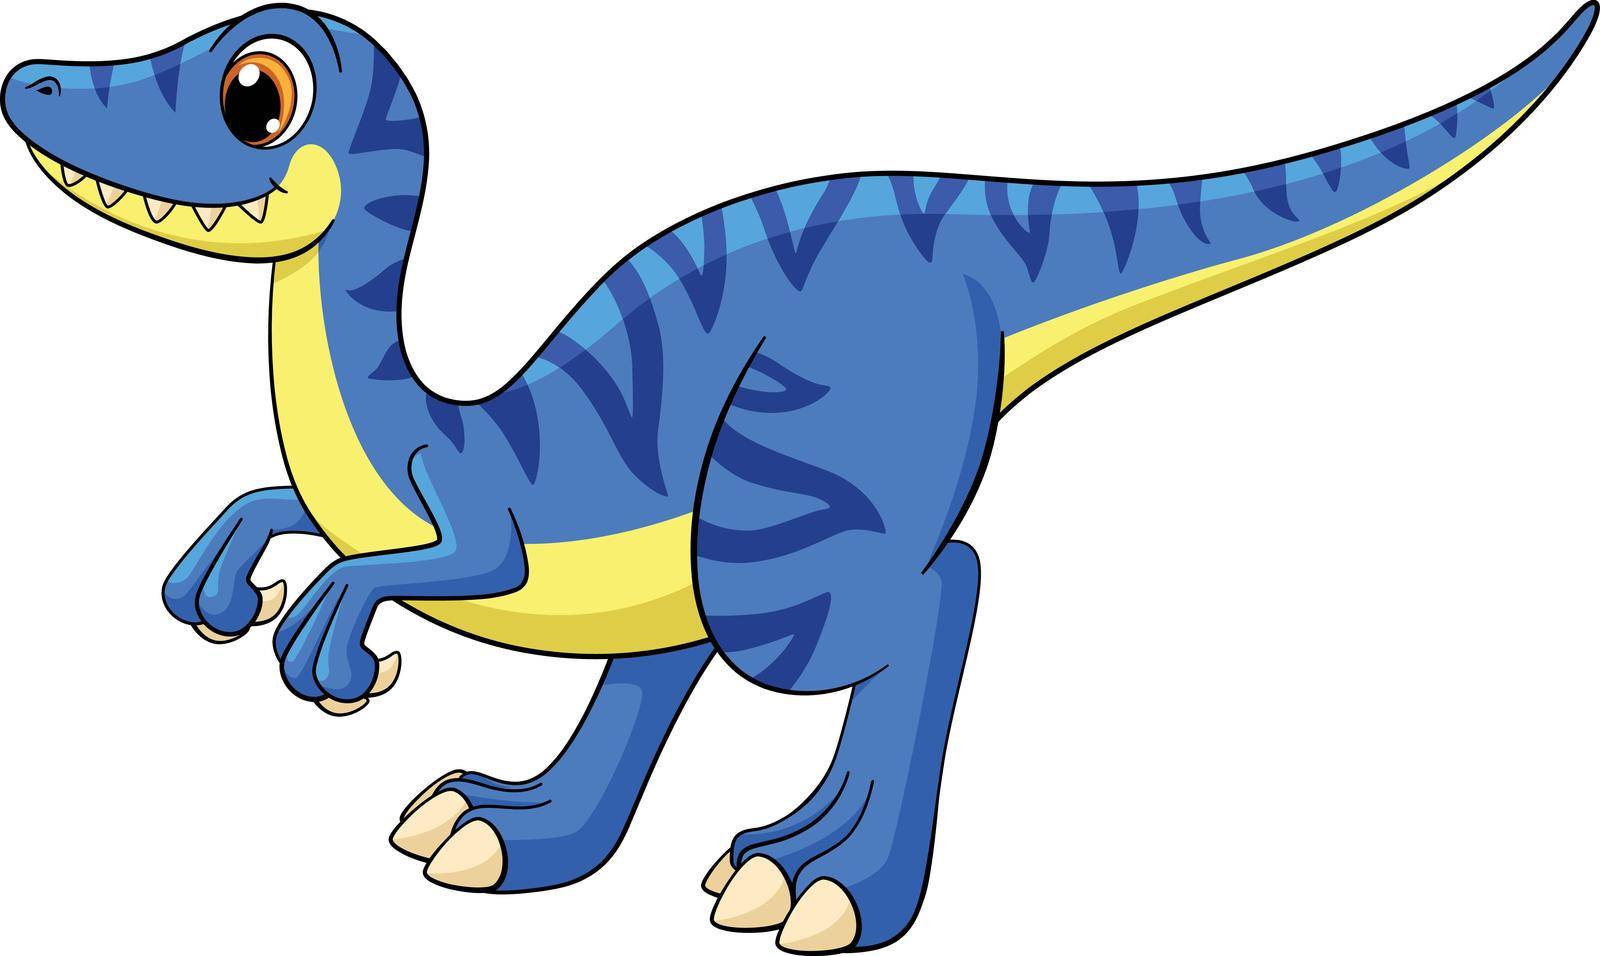 Baby raptor mascot. Cartoon blue velociraptor character isolated on white background